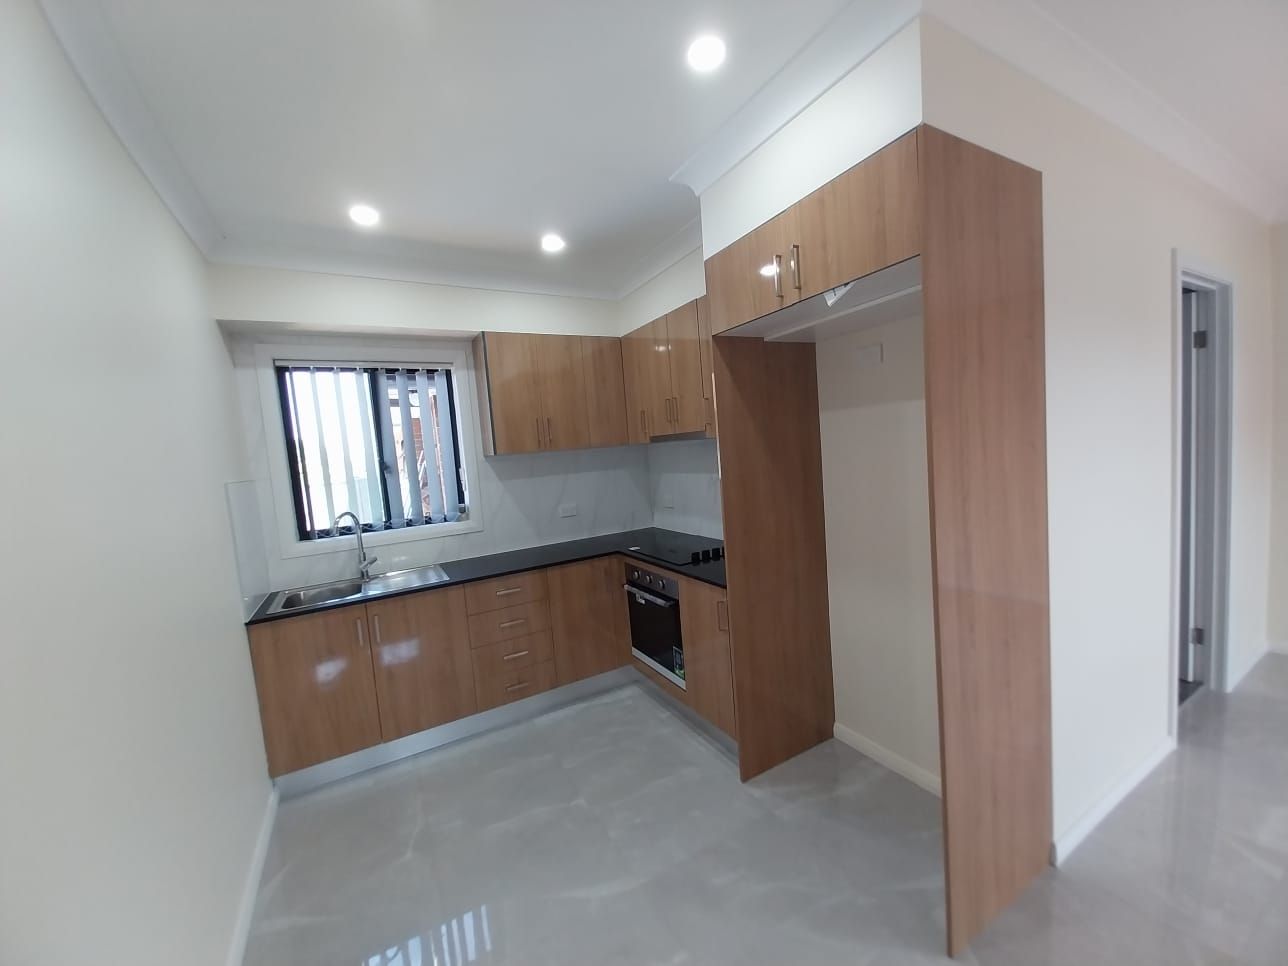 2 bedrooms Apartment / Unit / Flat in 23A Niblo Street DOONSIDE NSW, 2767